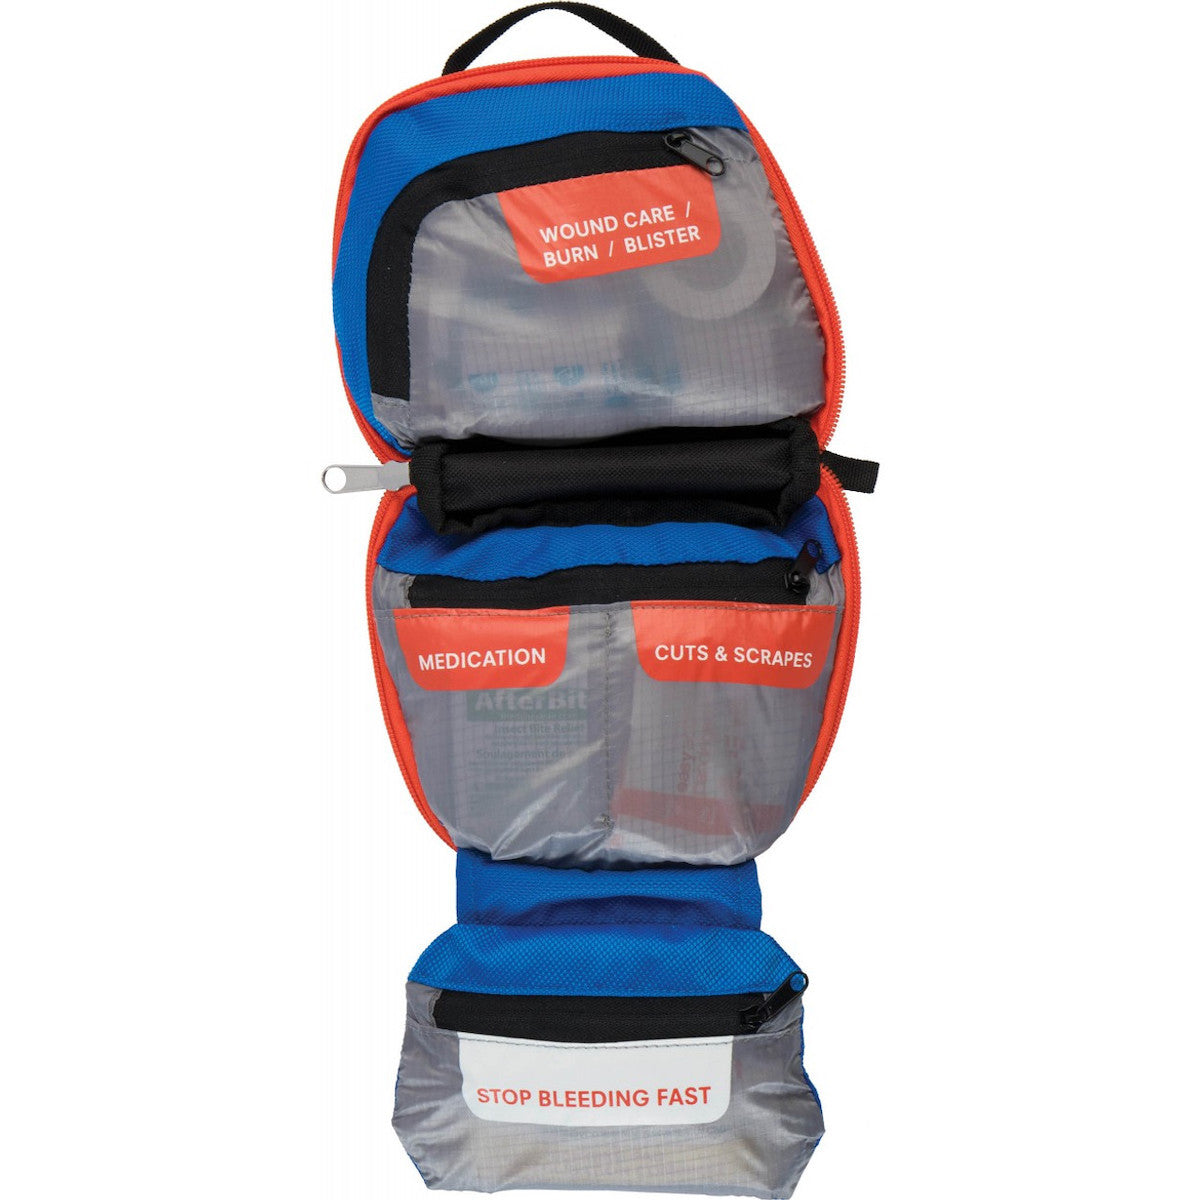 Adventure Medical Kit Mountain Series - Hiker First Aid Kit